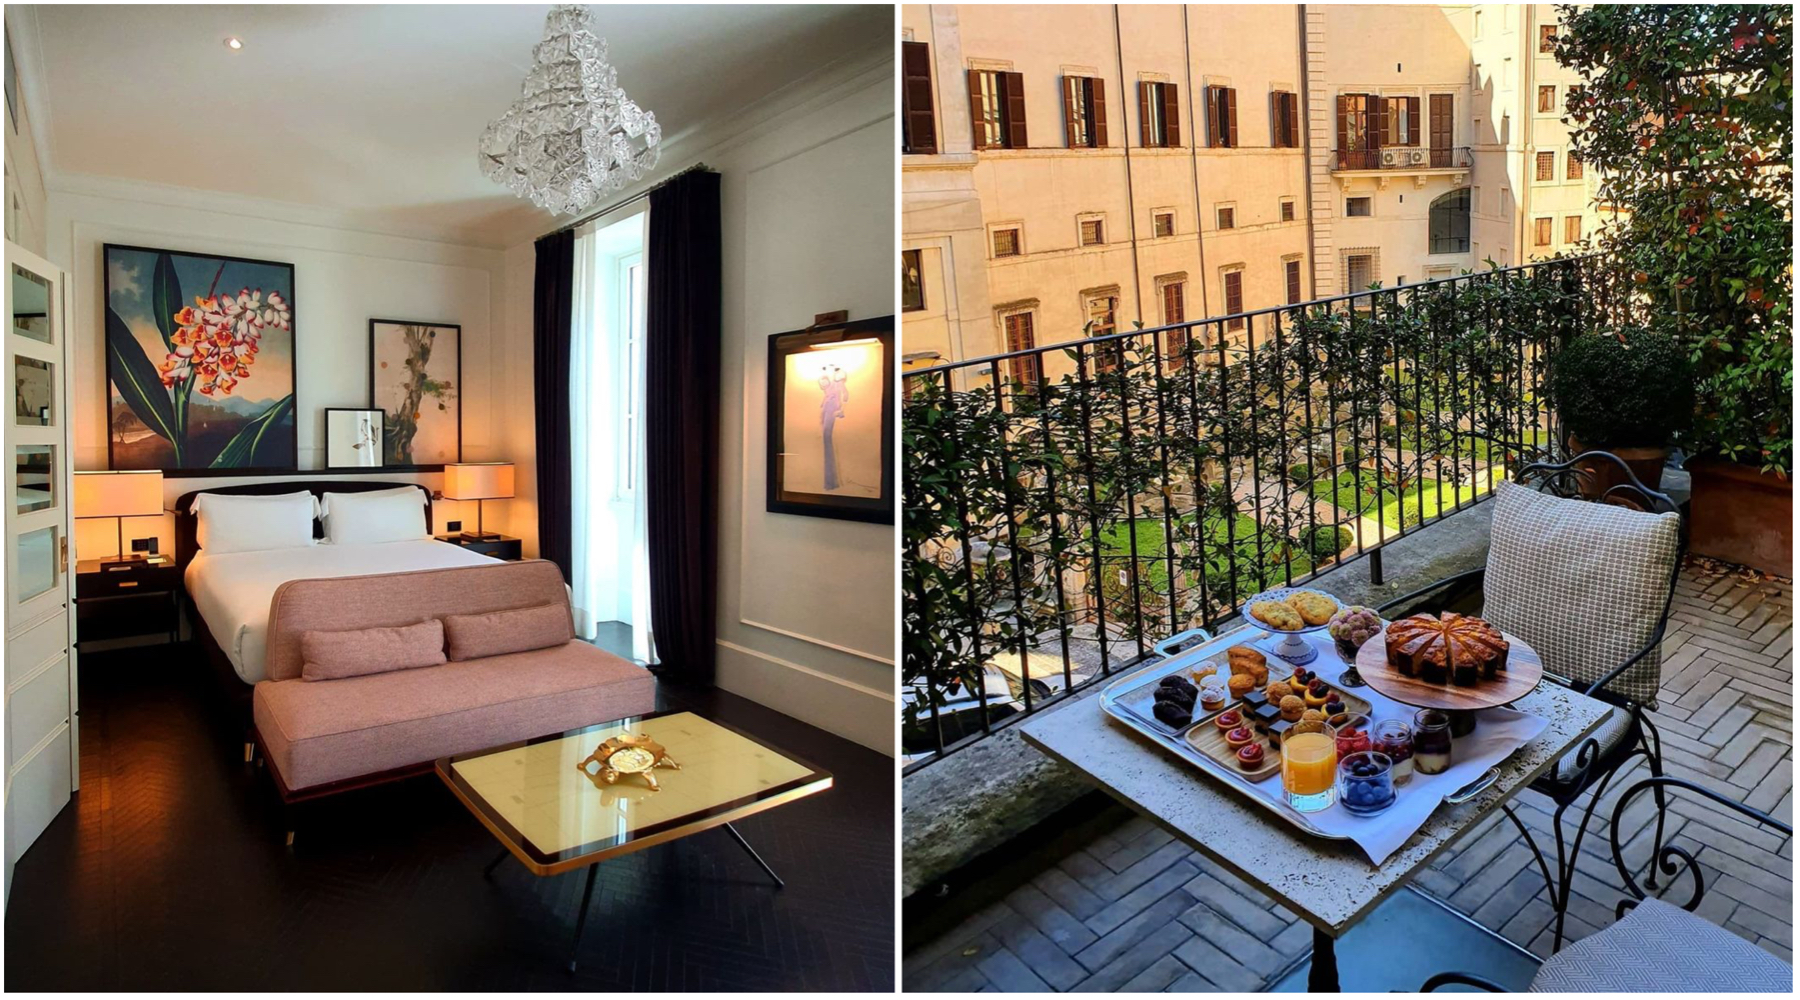 Predstavljamo vam Hotel Vilòn – luksuzni italijanski boutique hotel koji nas je očarao na prvu